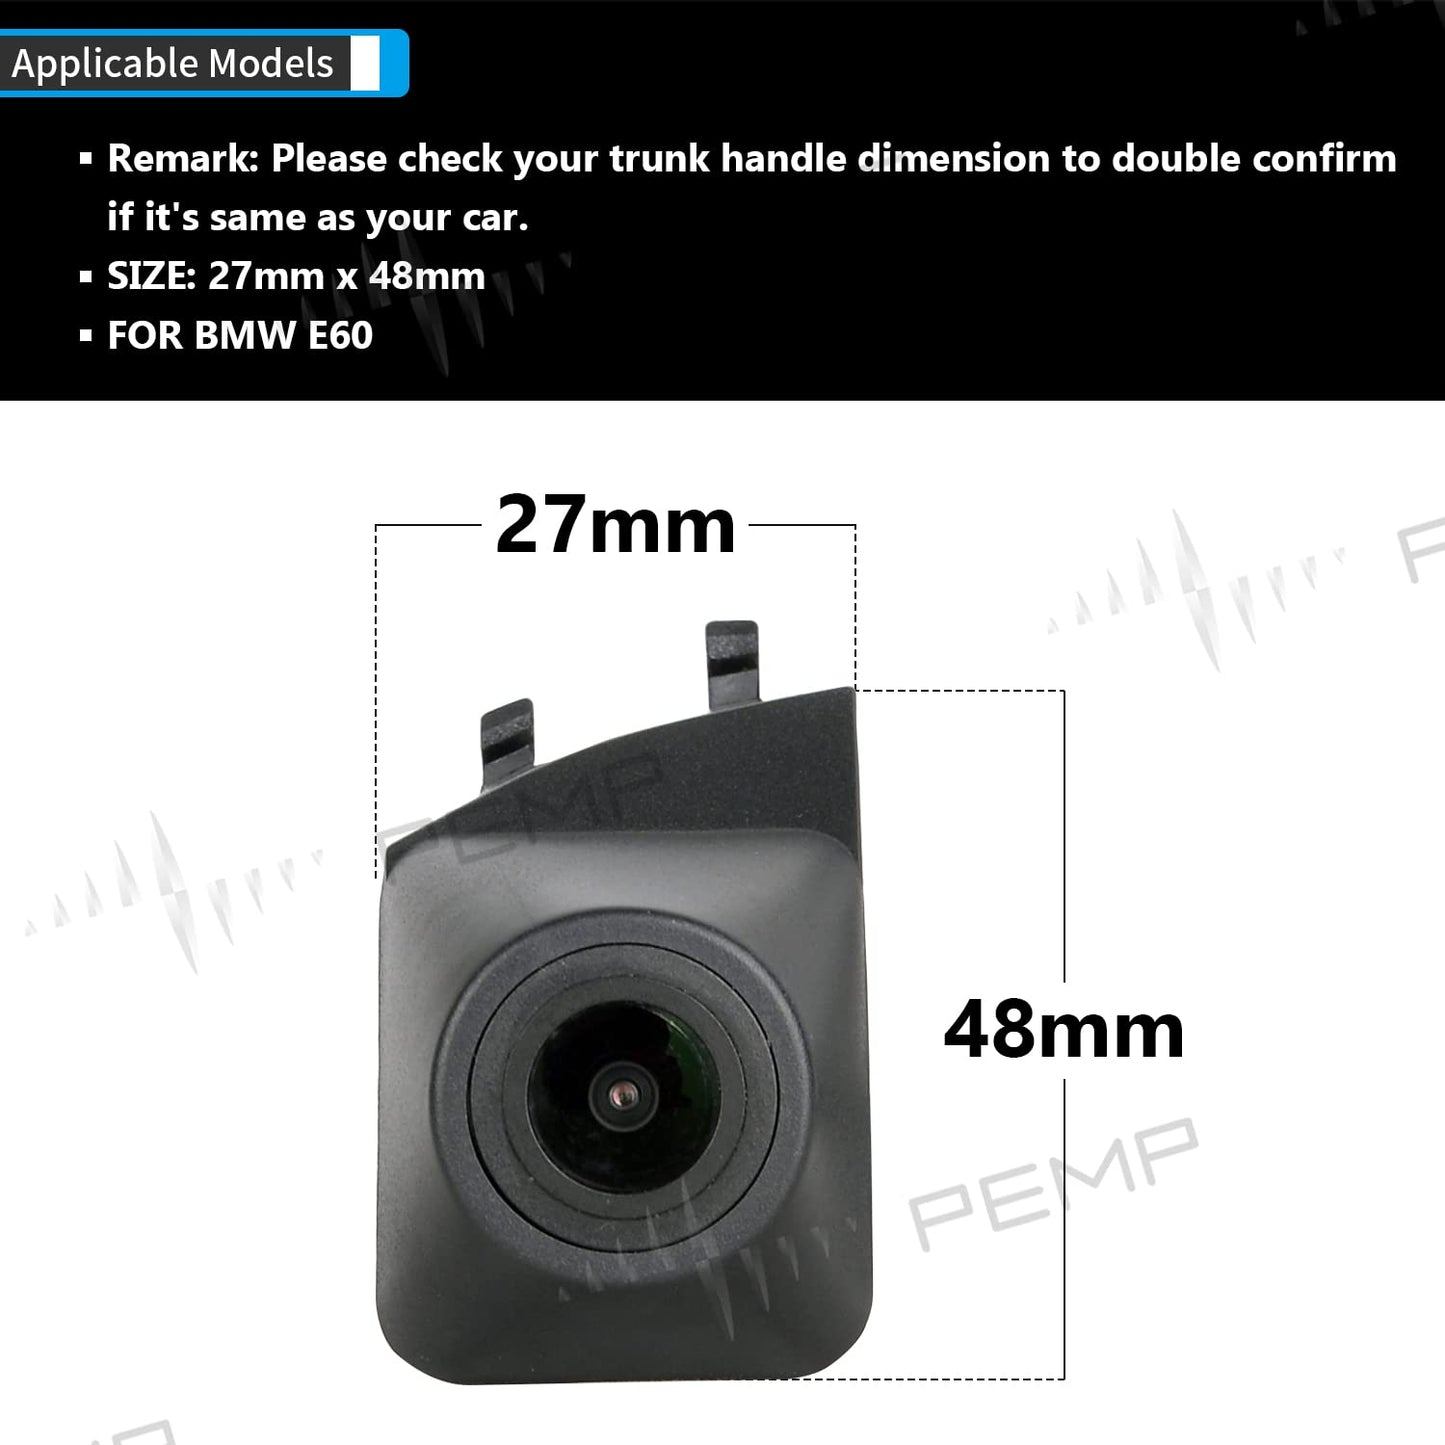 PEMP (E60 F) AHD Front Camera 1080P 30FPS for BMW E60 E61